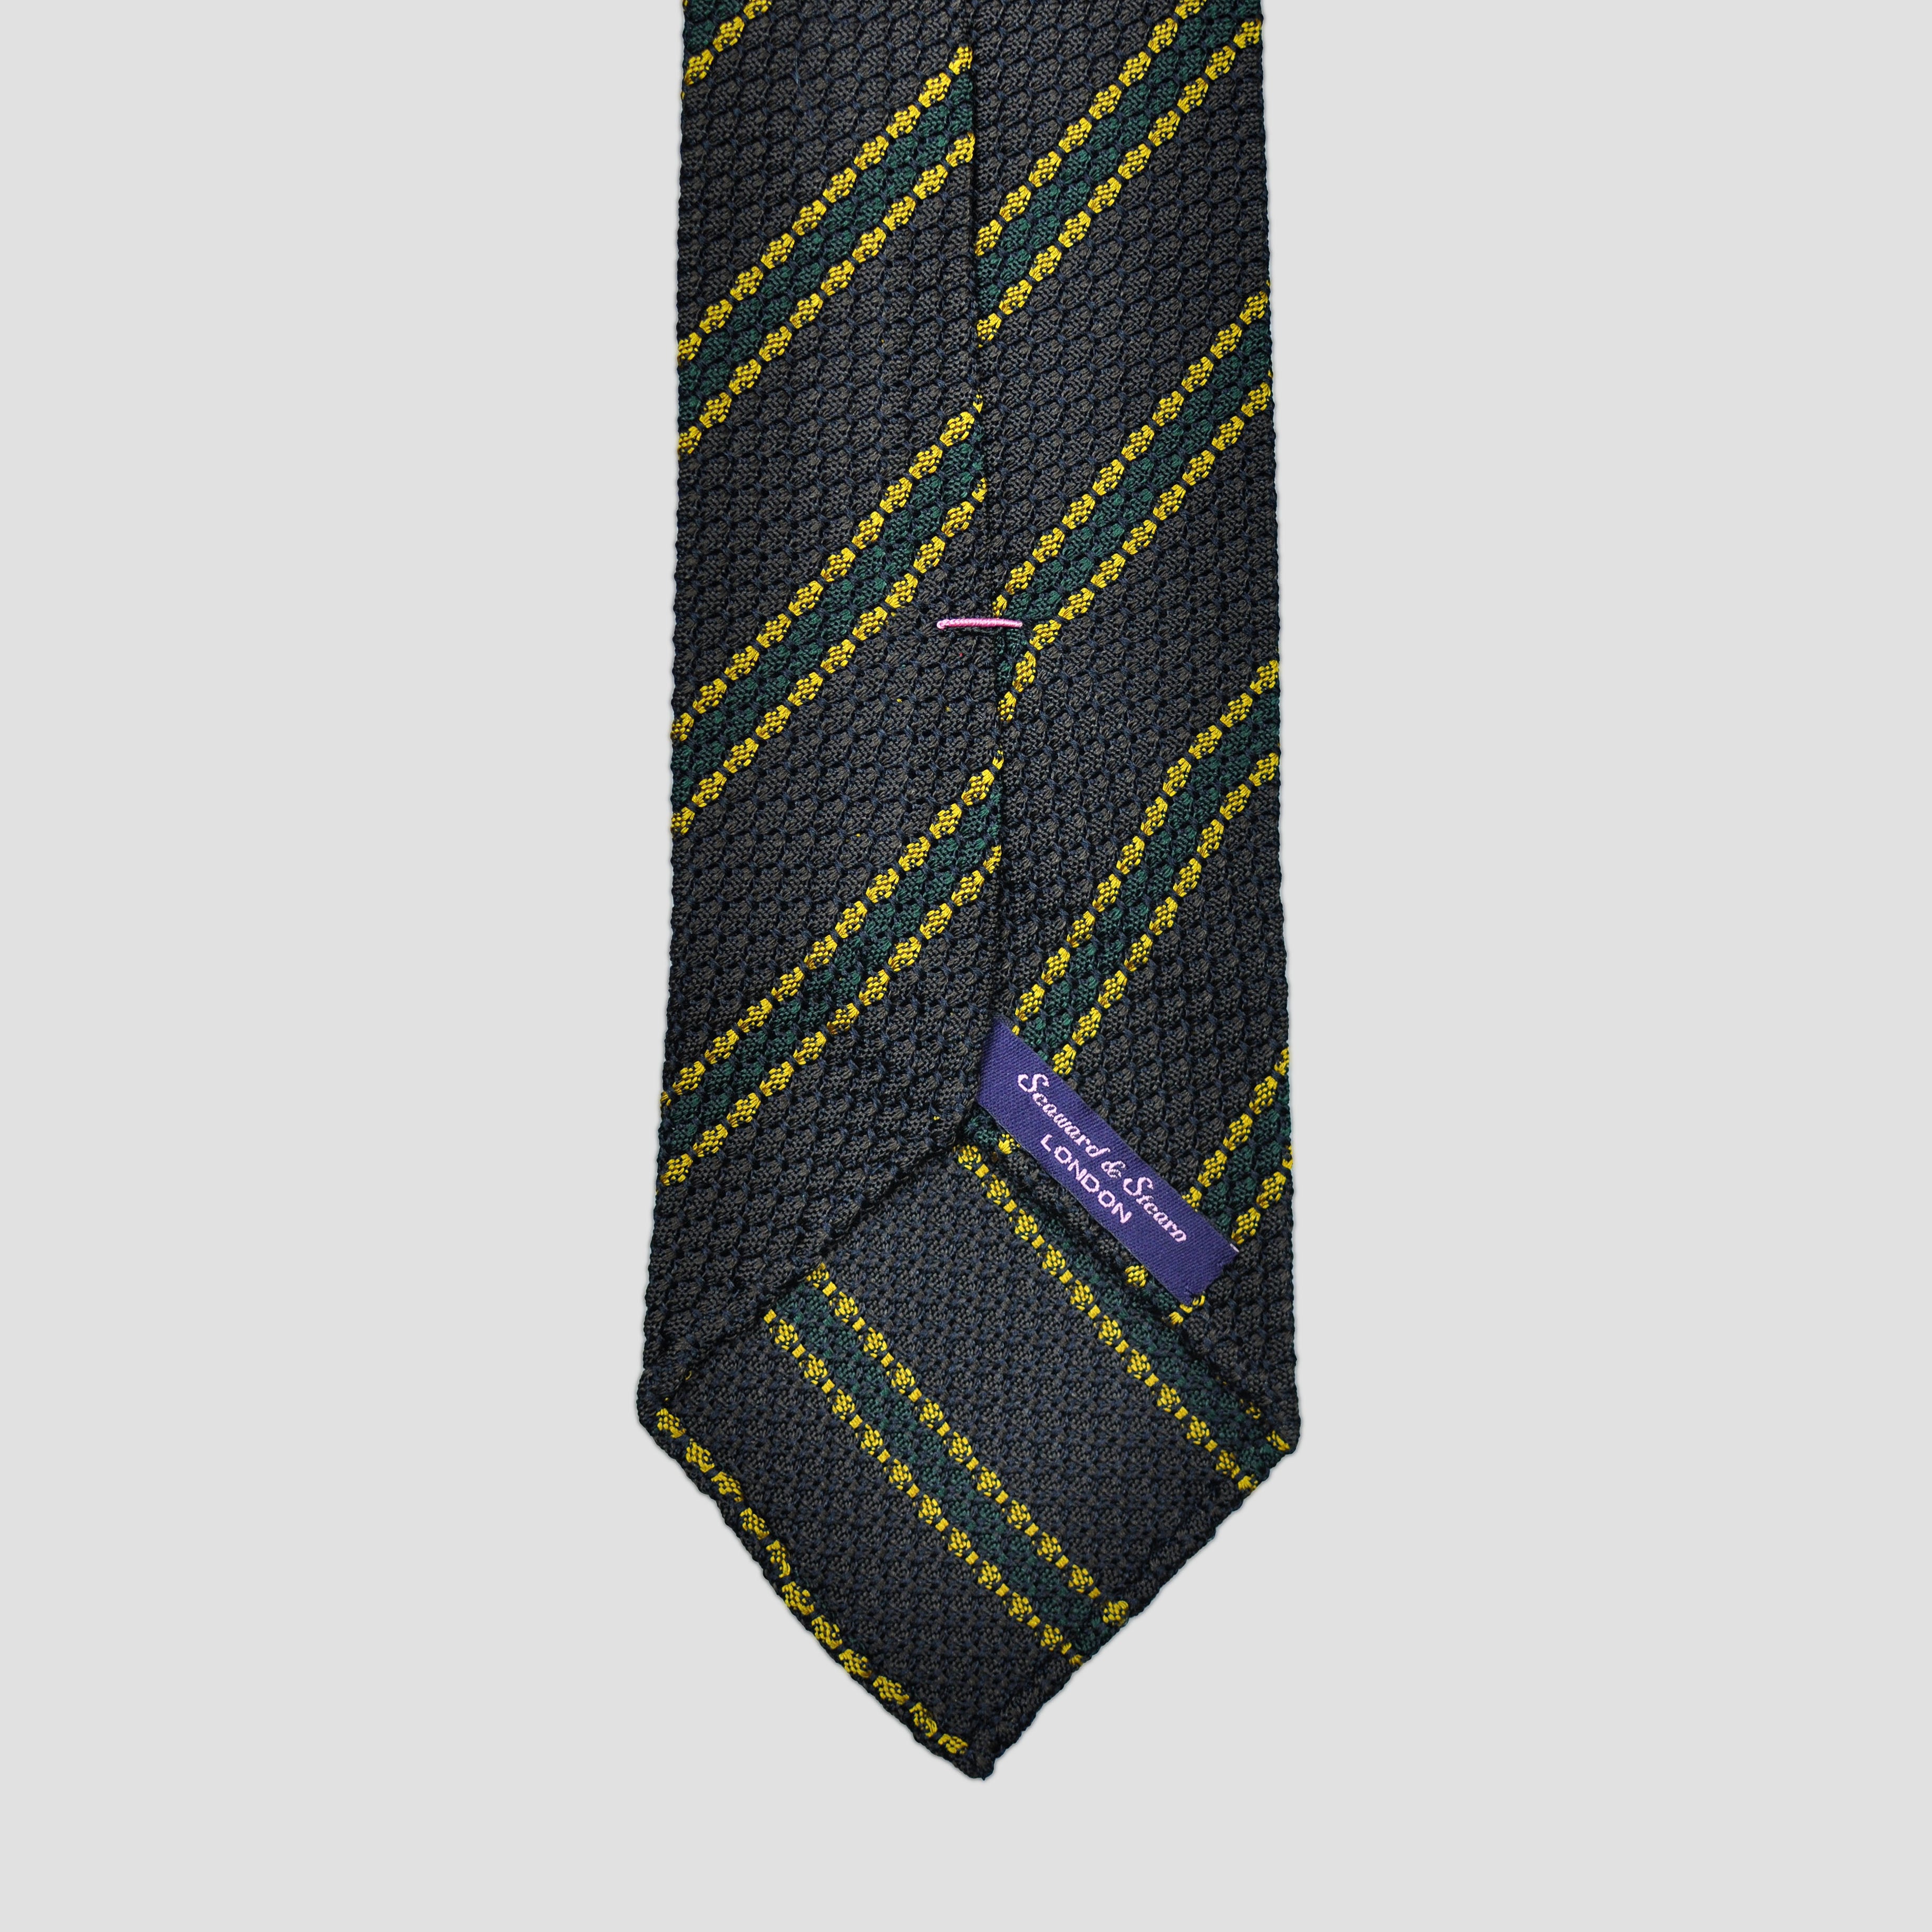 Neat Stripes Handrolled Grenadine Silk Tie in Brown, Green & Yellow